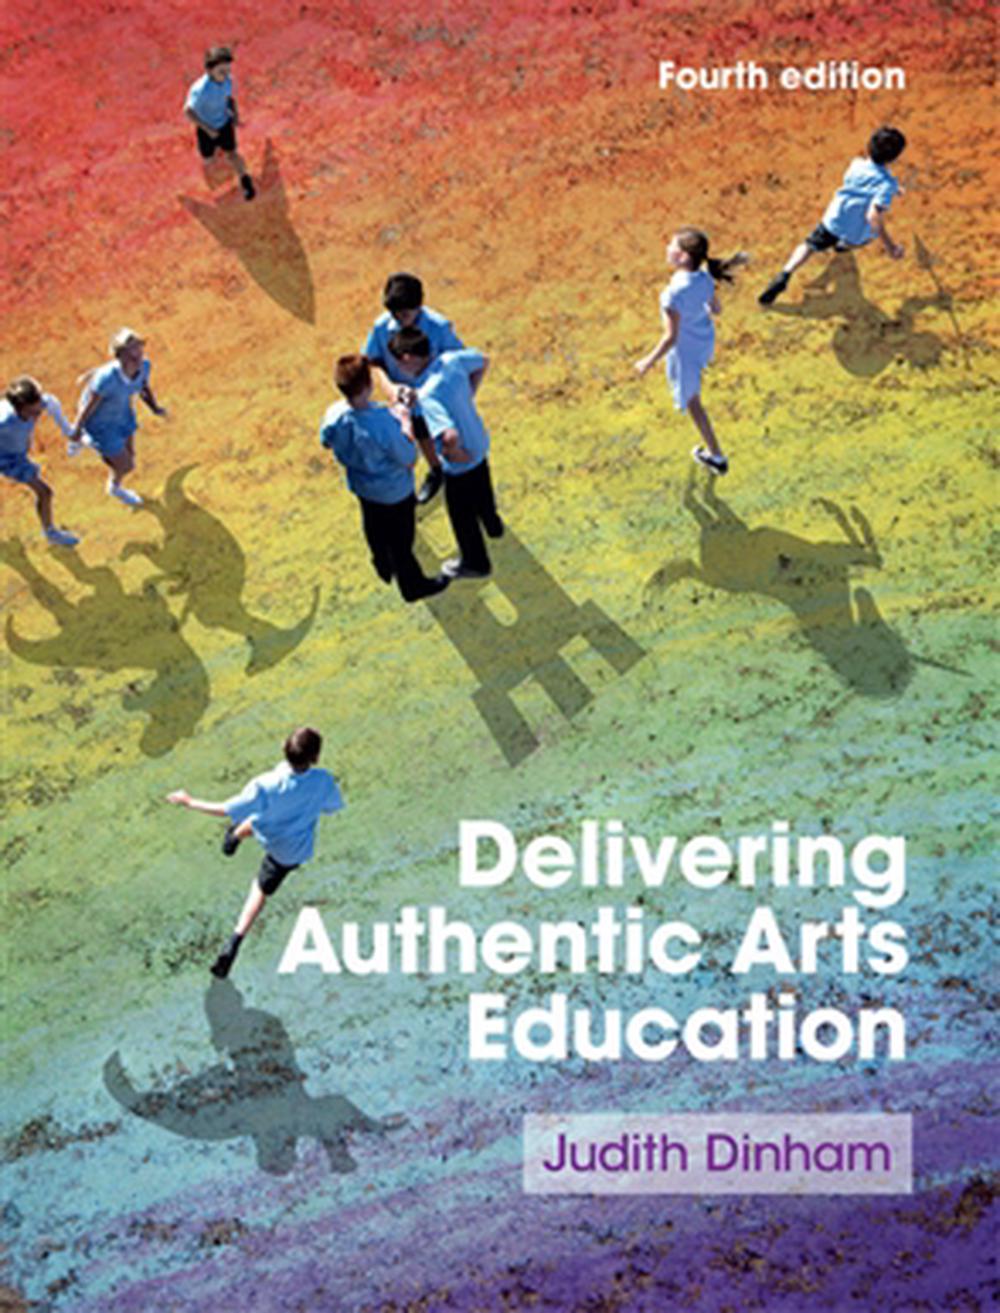 Delivering Authentic Arts Education (4th Edition) [2019] - Original PDF